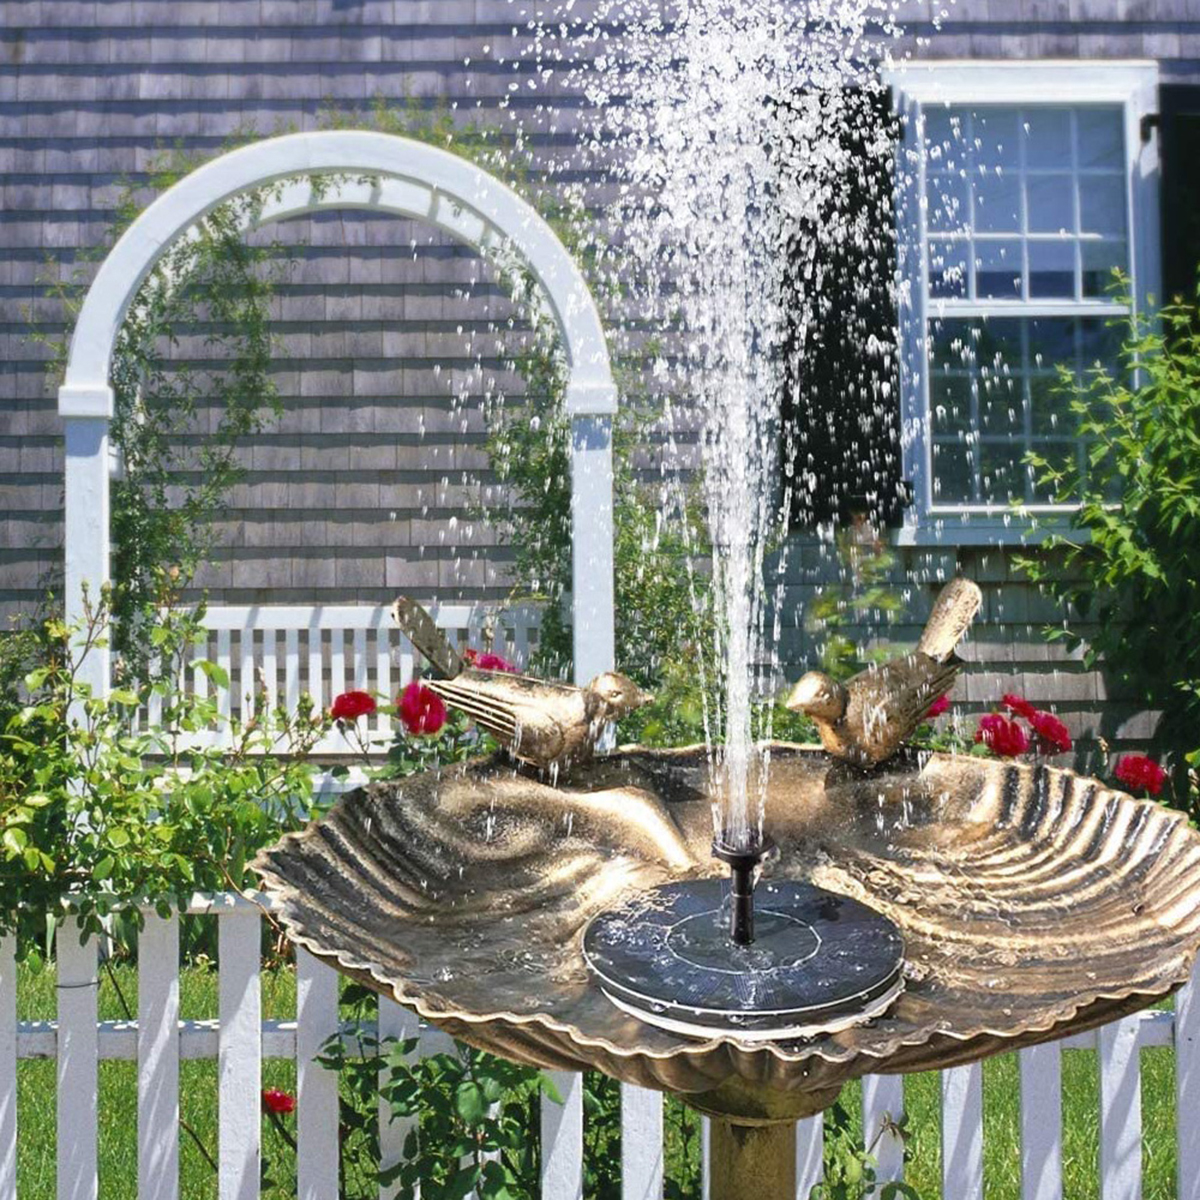 13cm-12W-Solar-Powered-Floating-Pump-Water-Fountain-Home-Garden-Birdbath-Pool-1752445-8